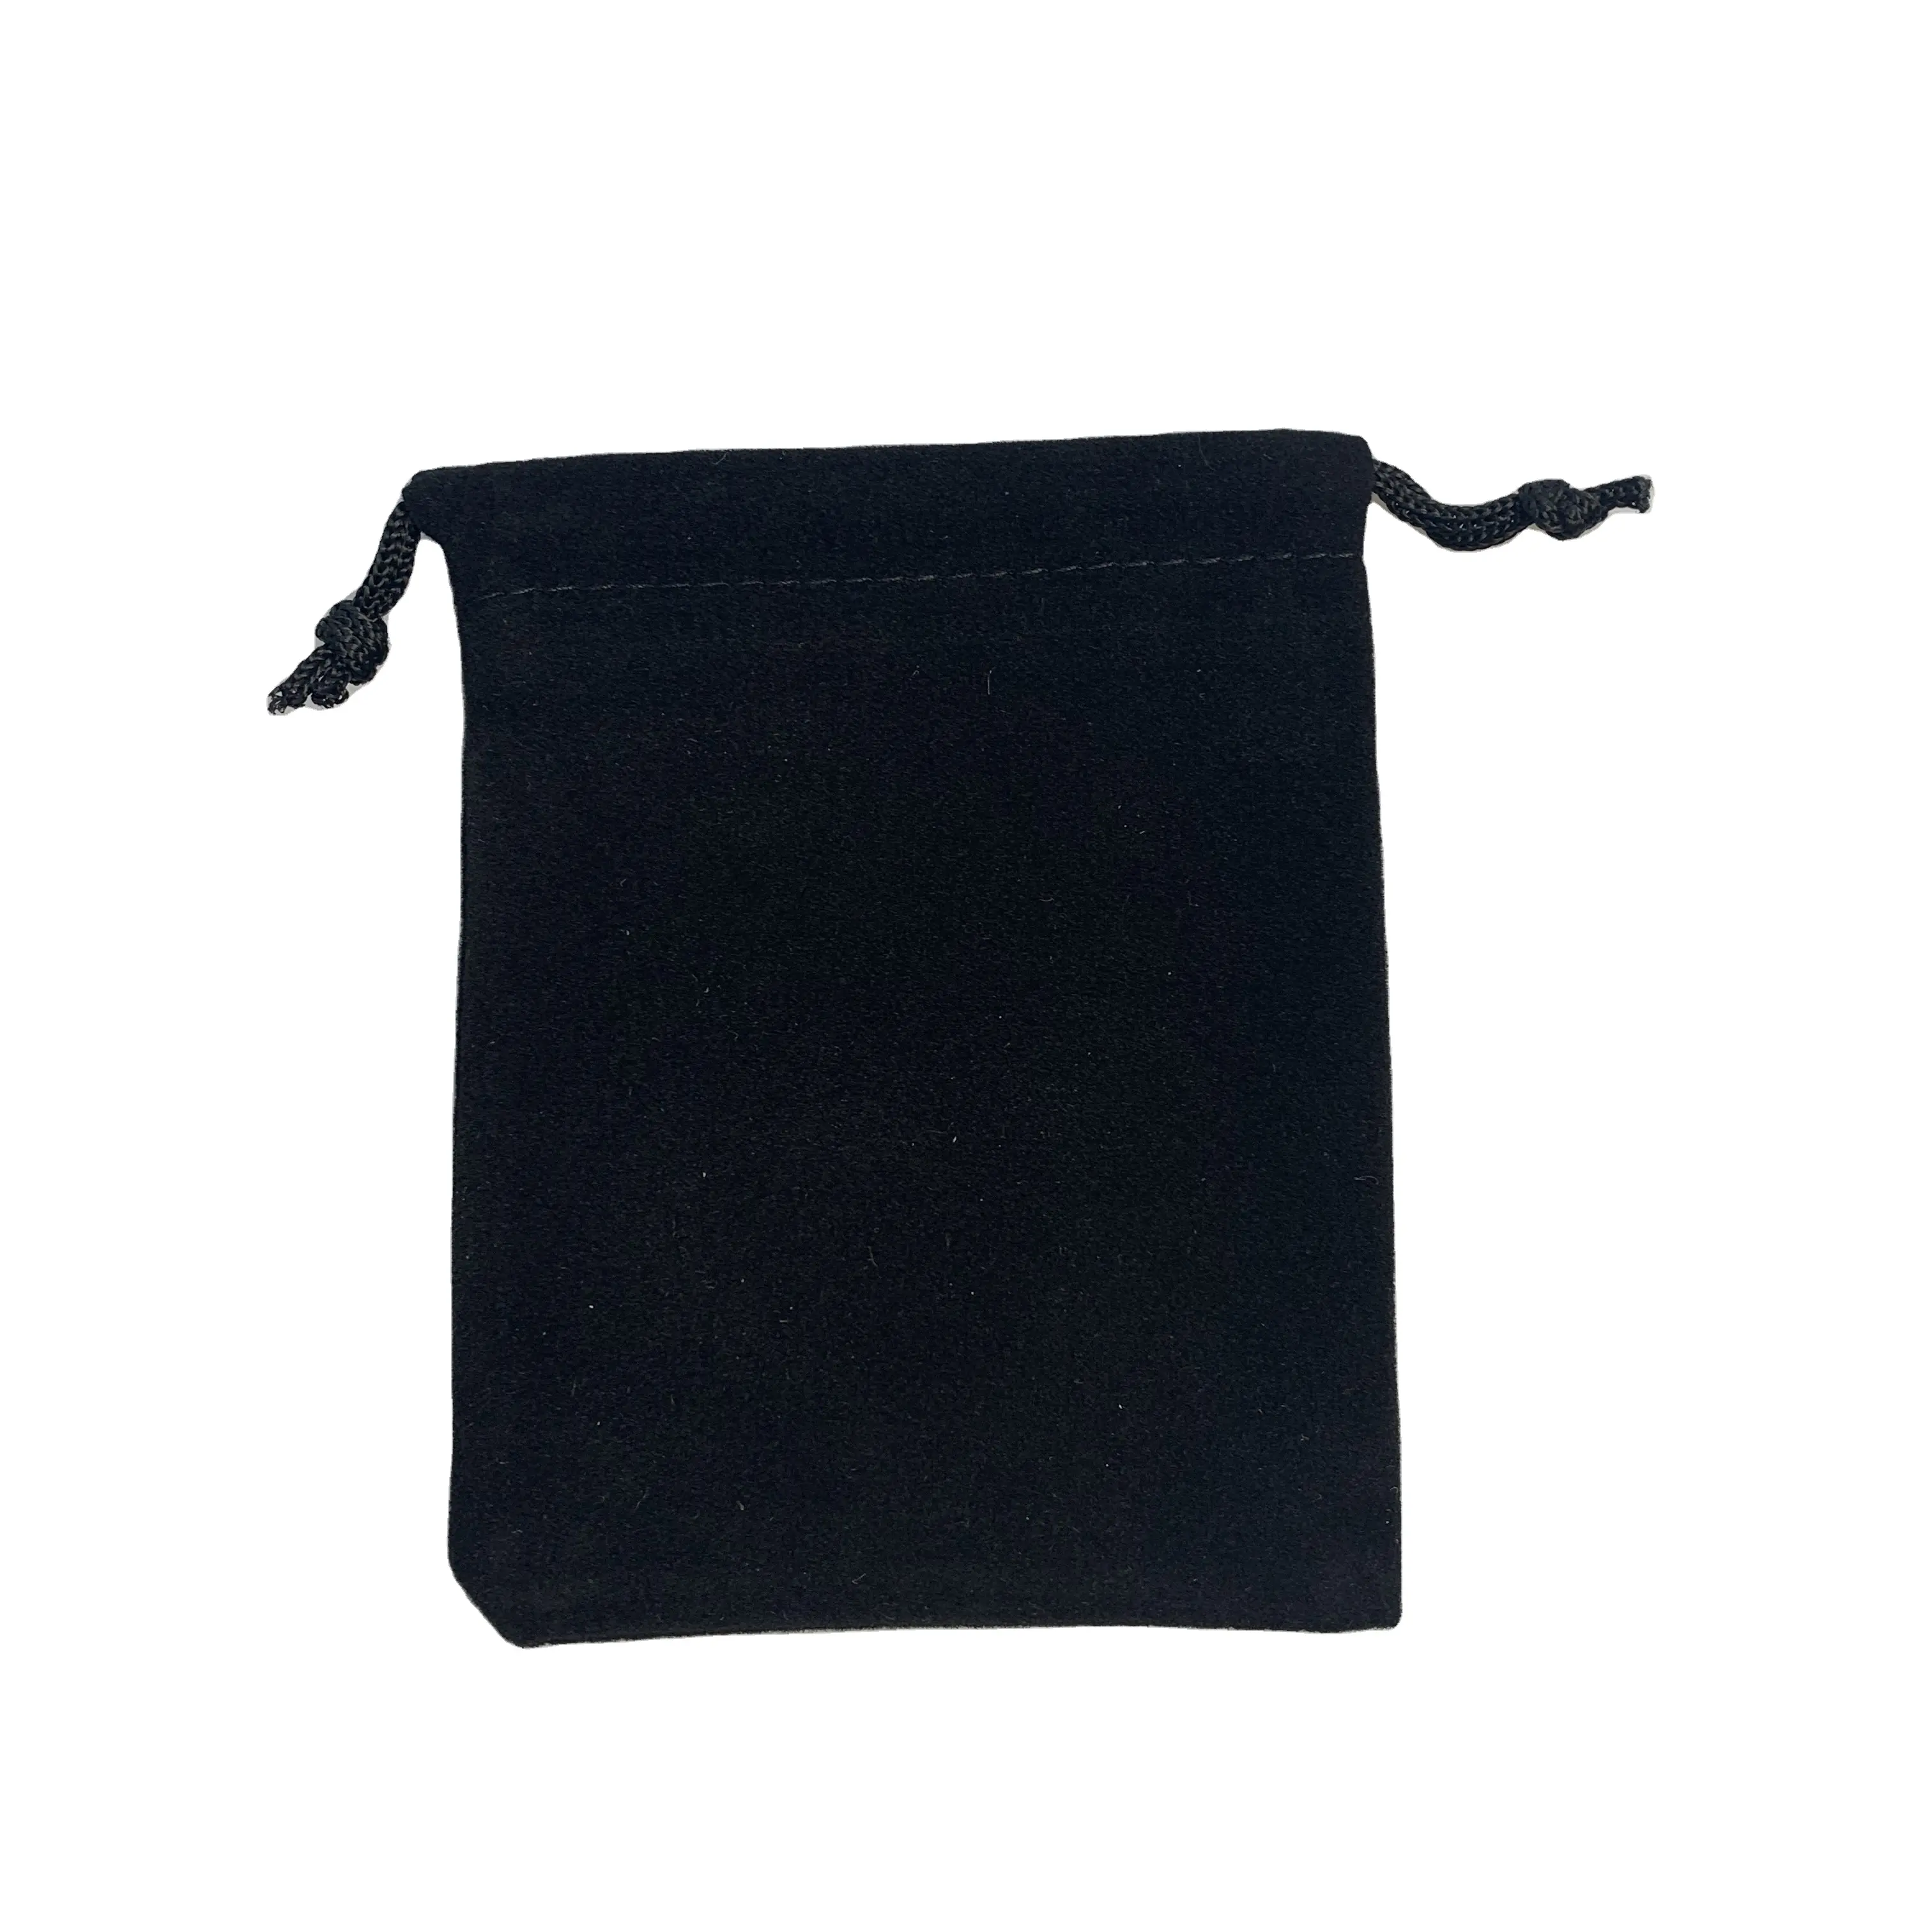 काला 9.5*8 सेमी मखमली उपहार बैग आभूषण के लिए मखमली पाउच साटन डाइज़ अनुकूलित सतह स्पर्श जूट रंग मुद्रण